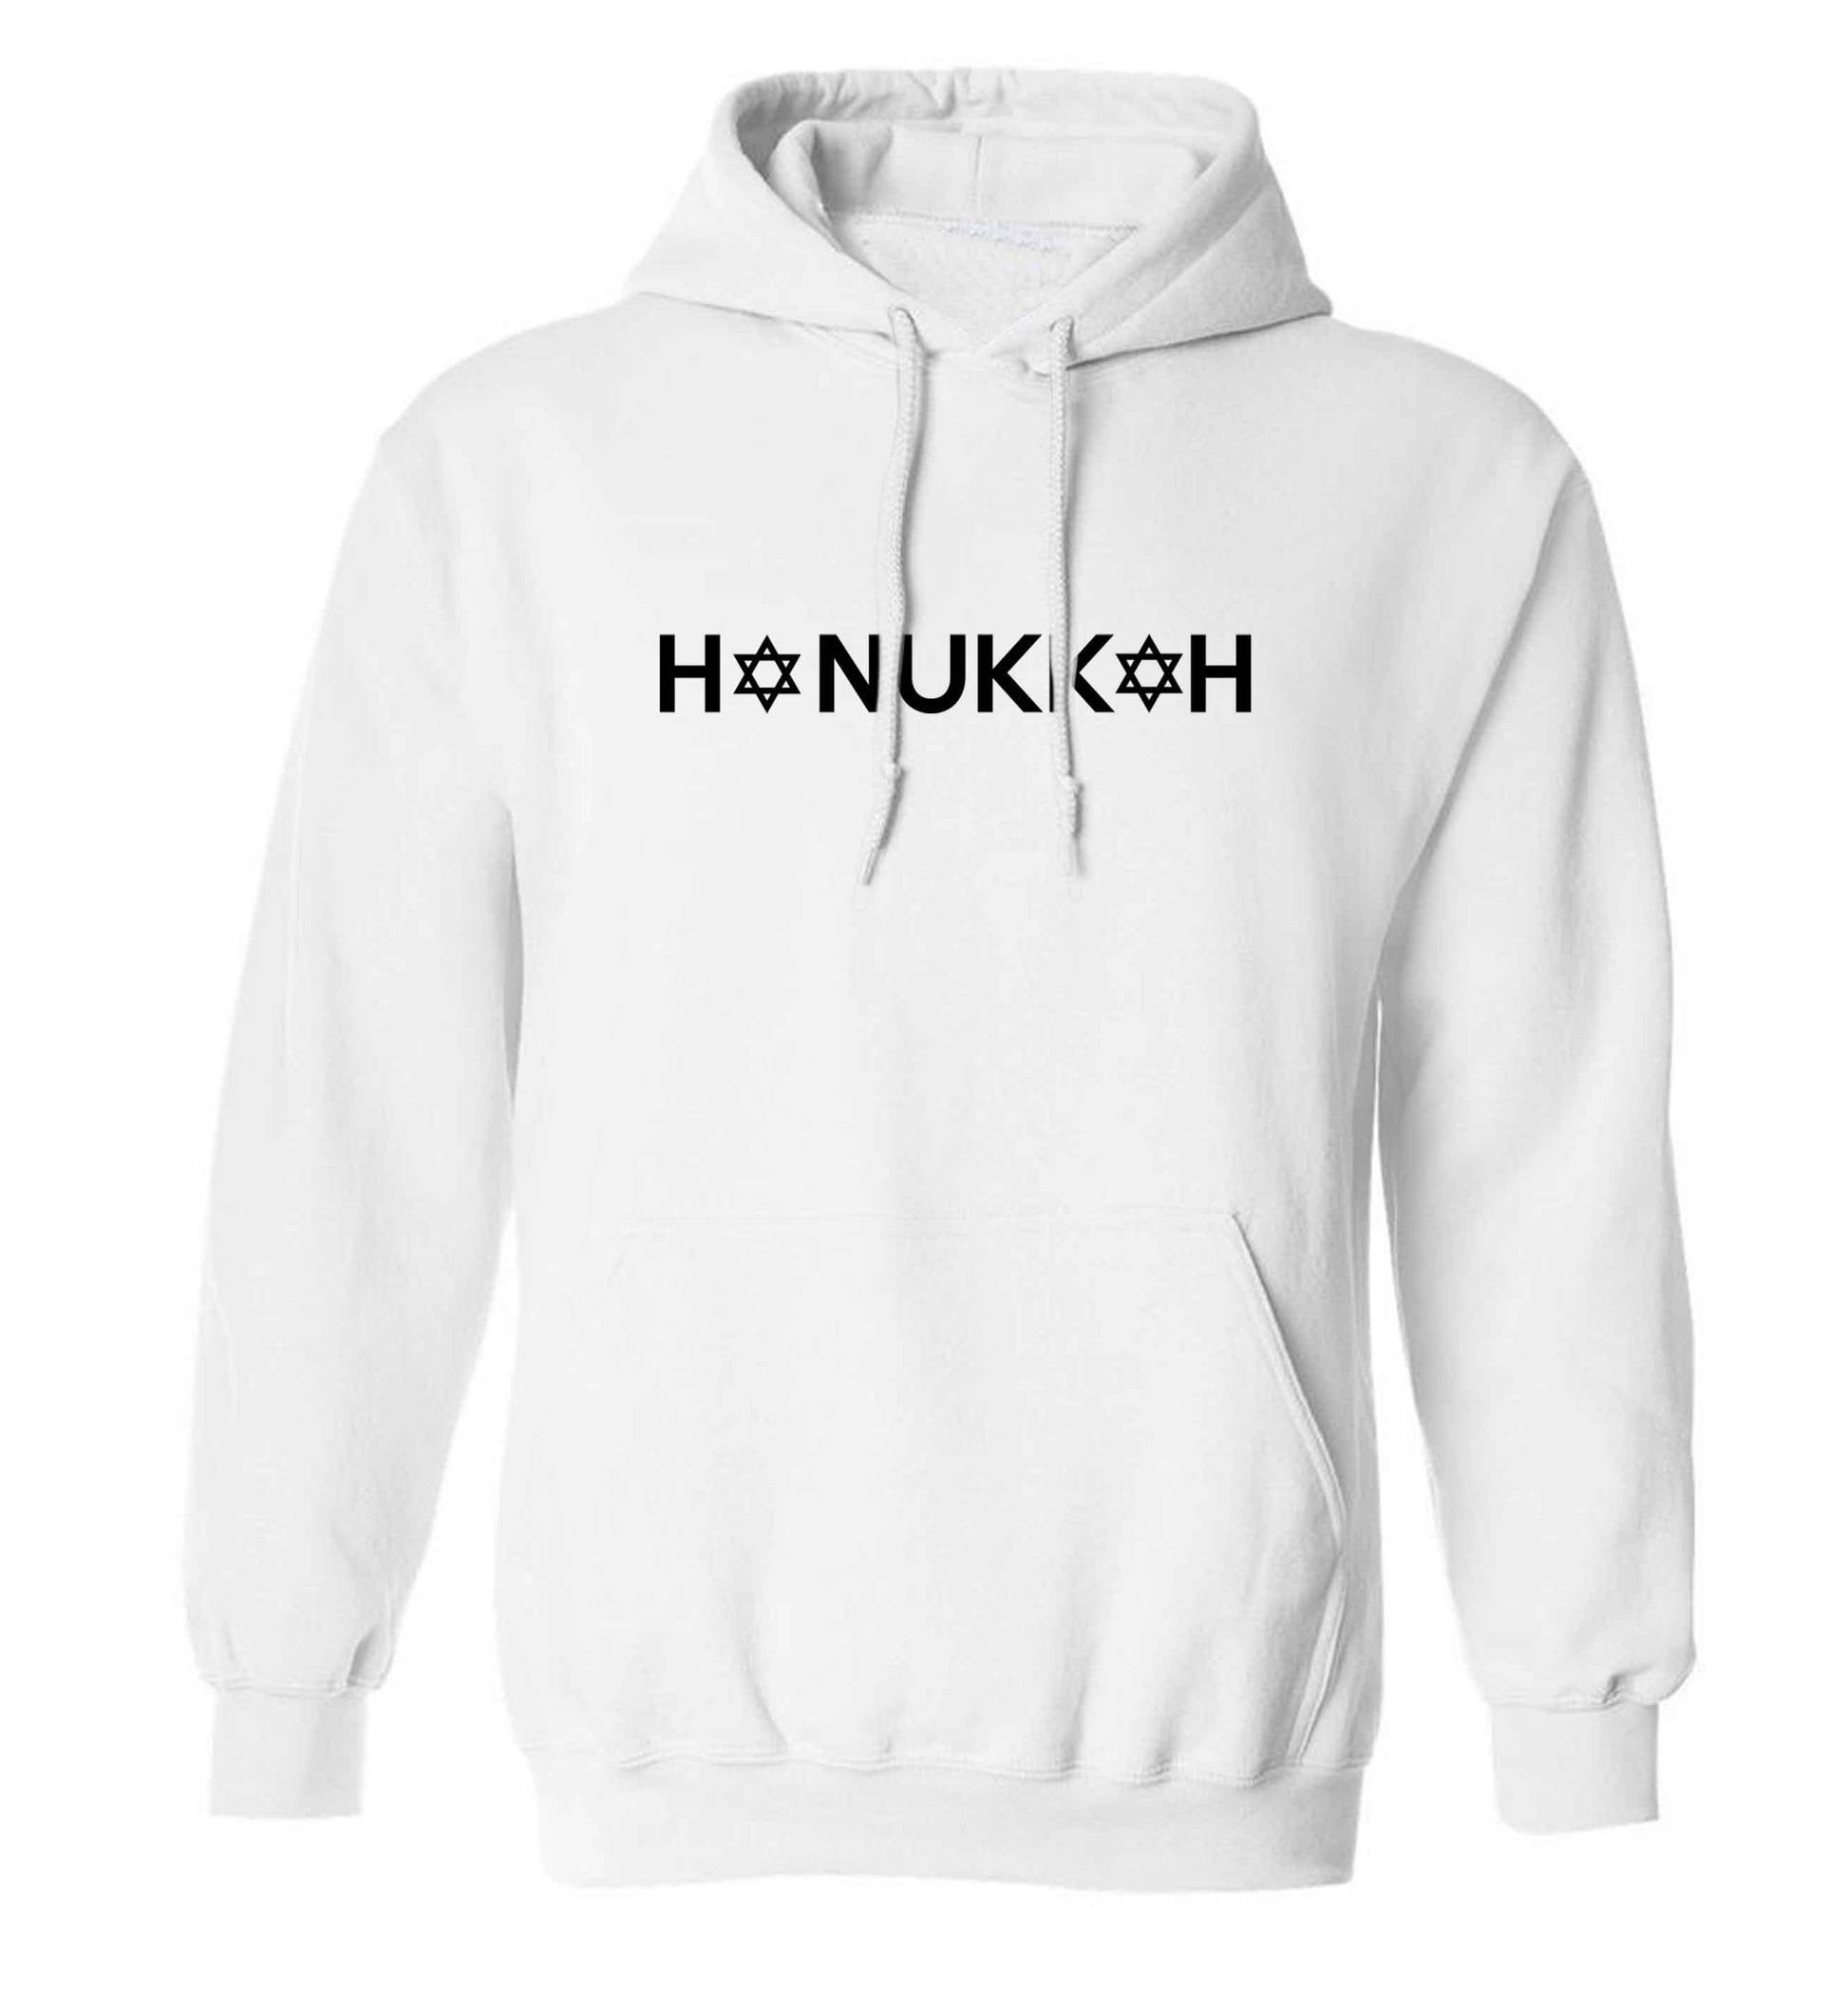 Hanukkah star of david adults unisex white hoodie 2XL